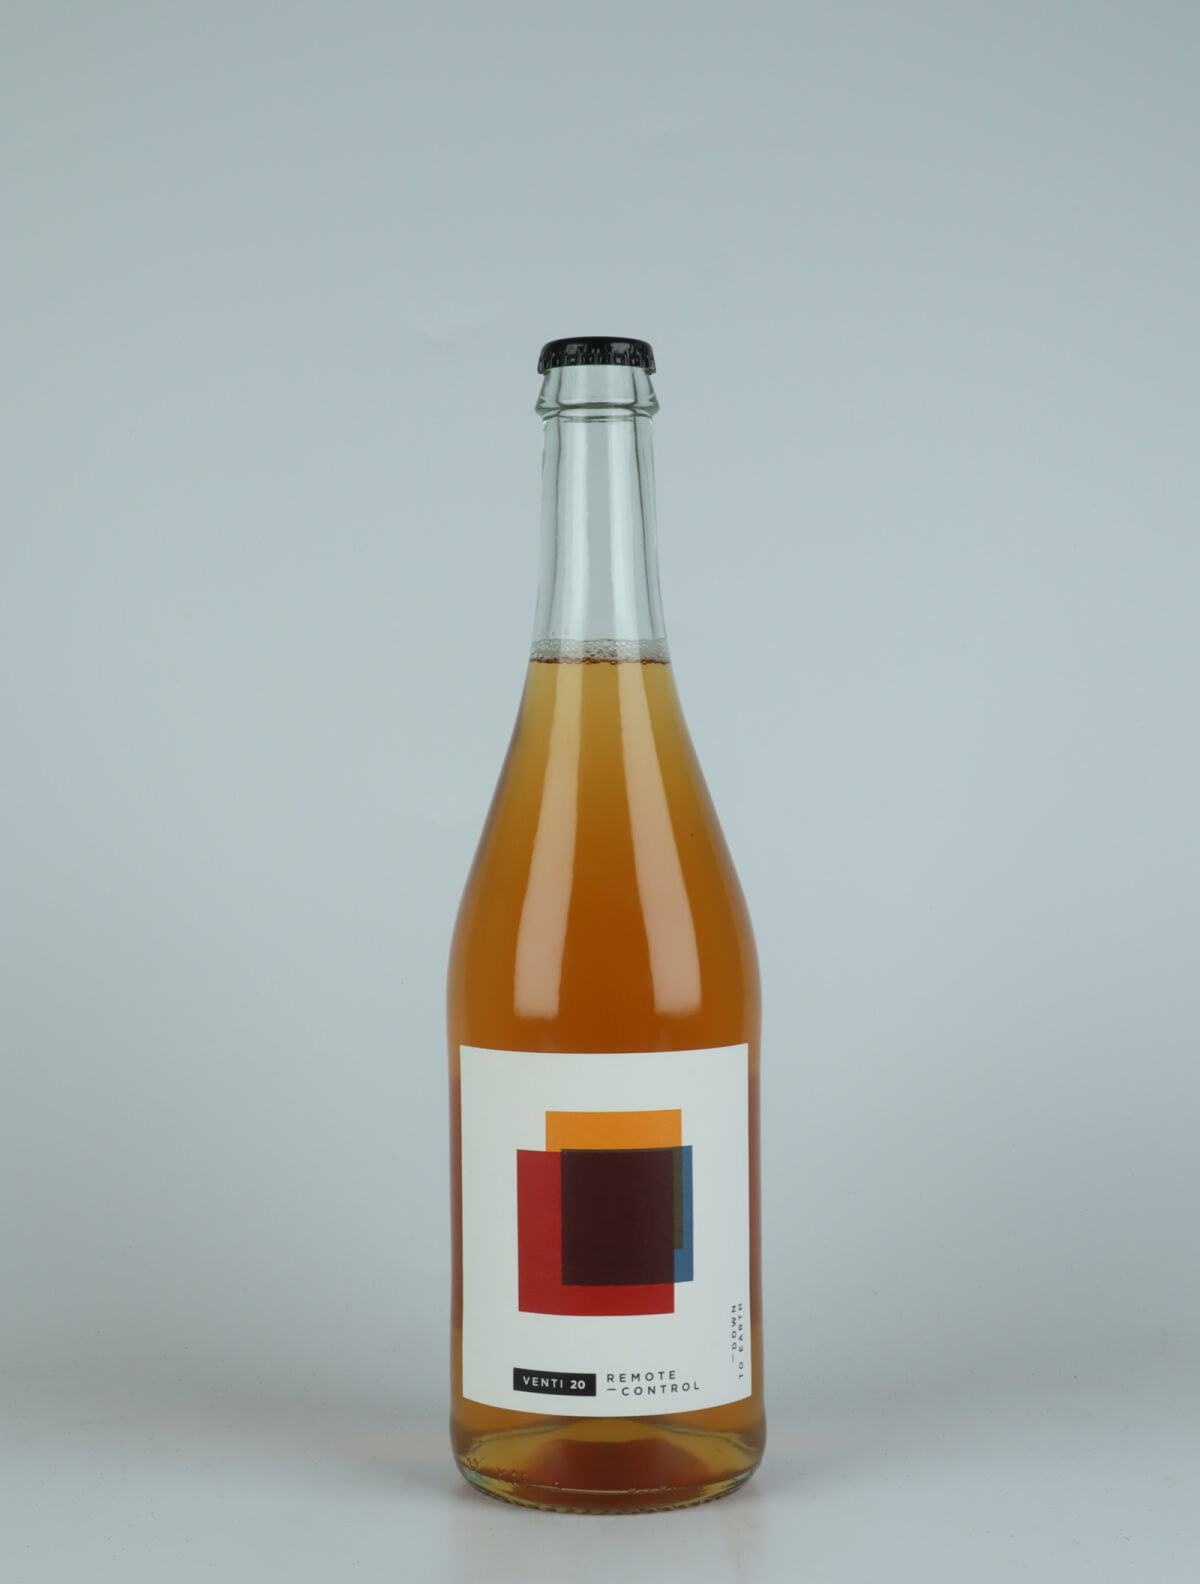 A bottle 2020 Remote Control Orange wine from do.t.e Vini, Tuscany in Italy